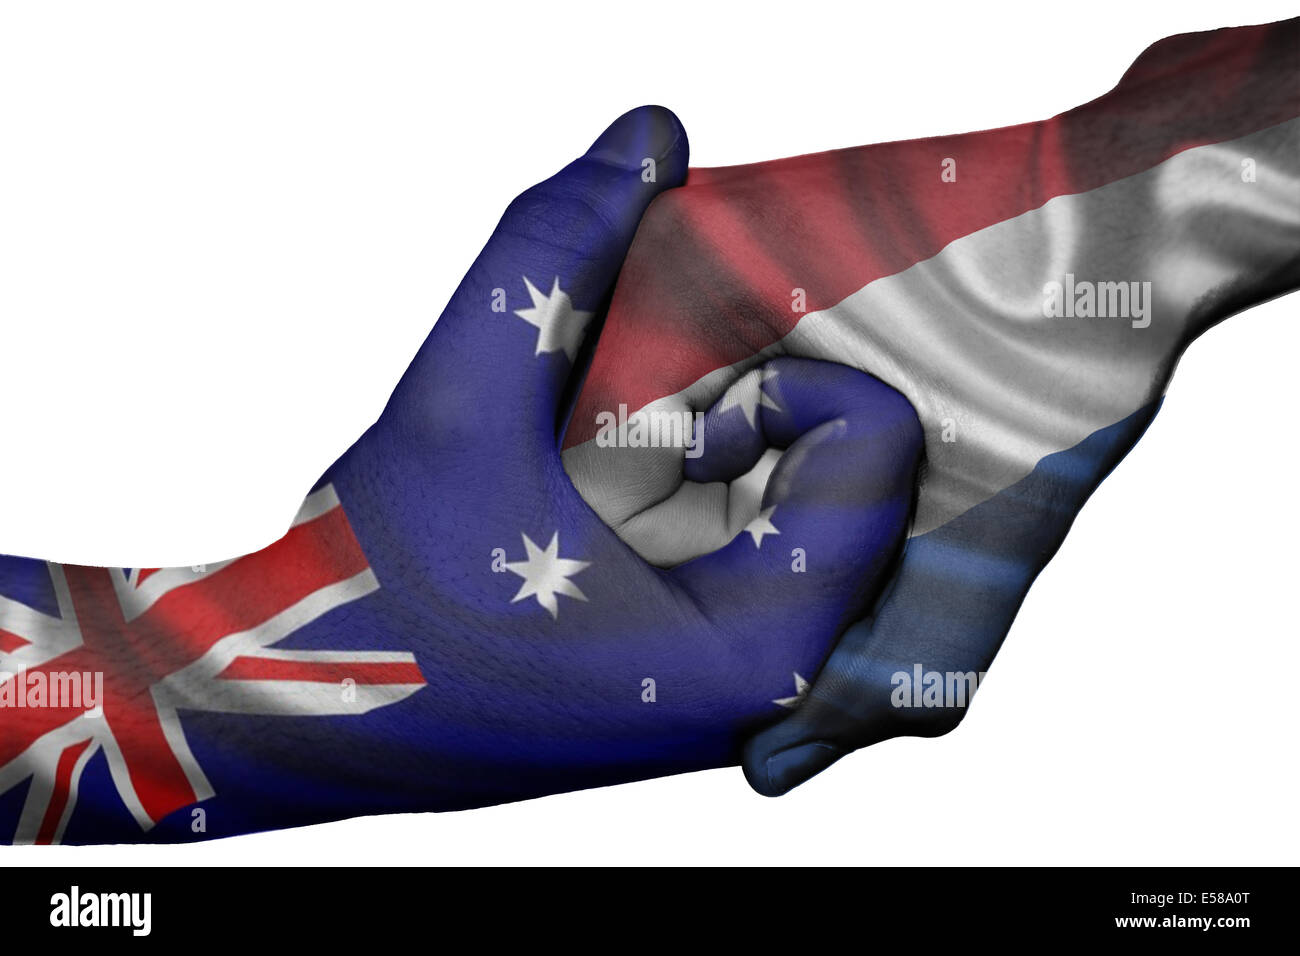 Handshake diplomatiche tra paesi: bandiere di Australia e Paesi Bassi sovradipinta le due mani Foto Stock